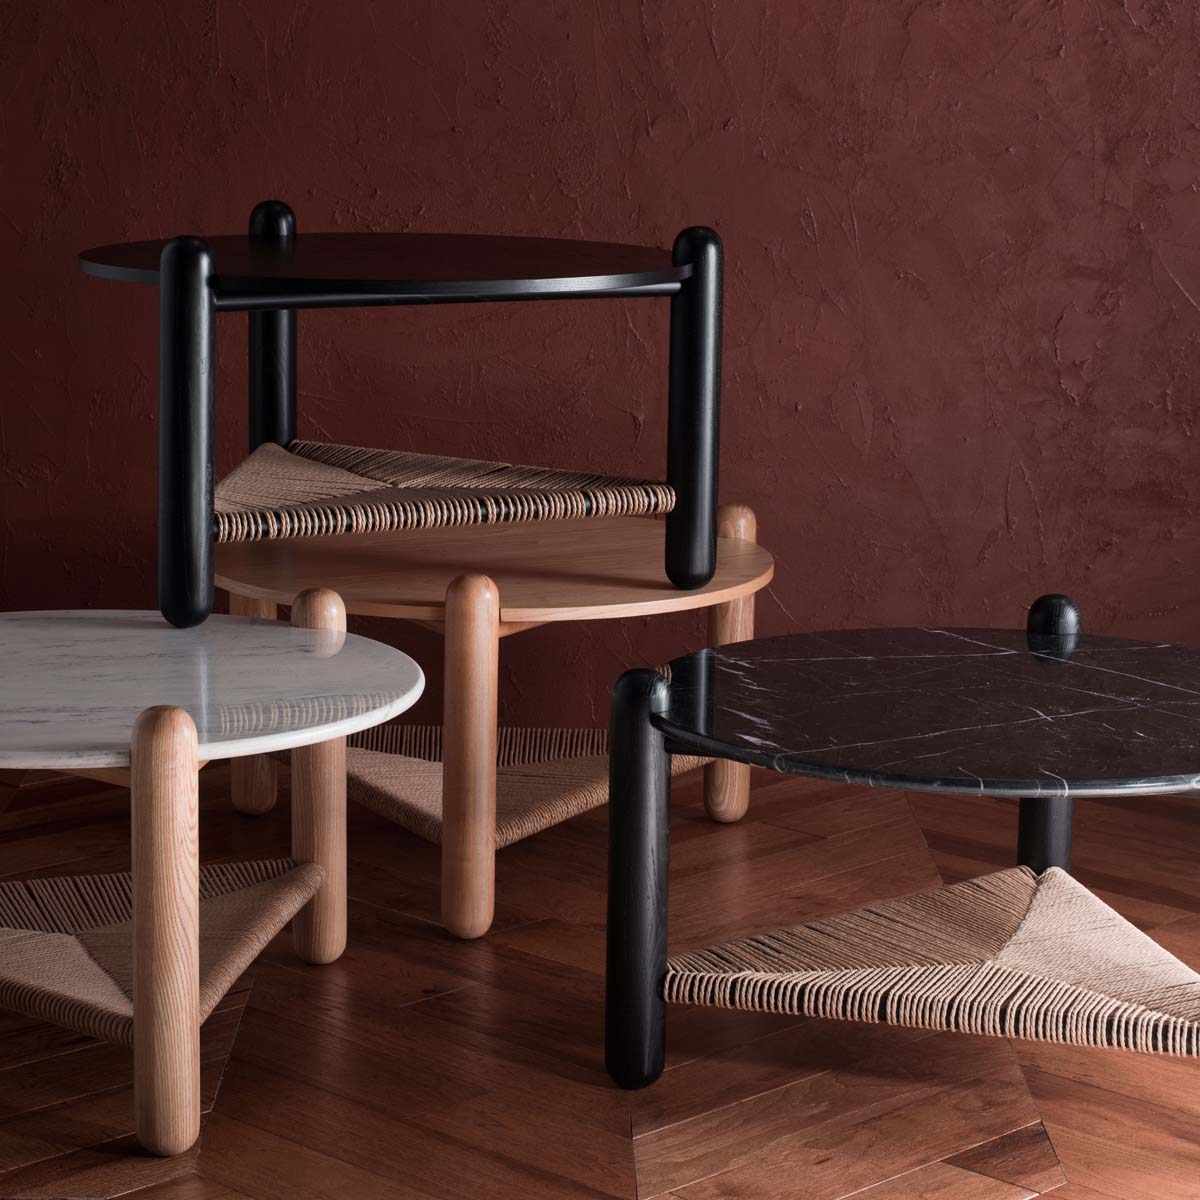 Safavieh Couture Macianna Woven Shelf Coffee Table - Black